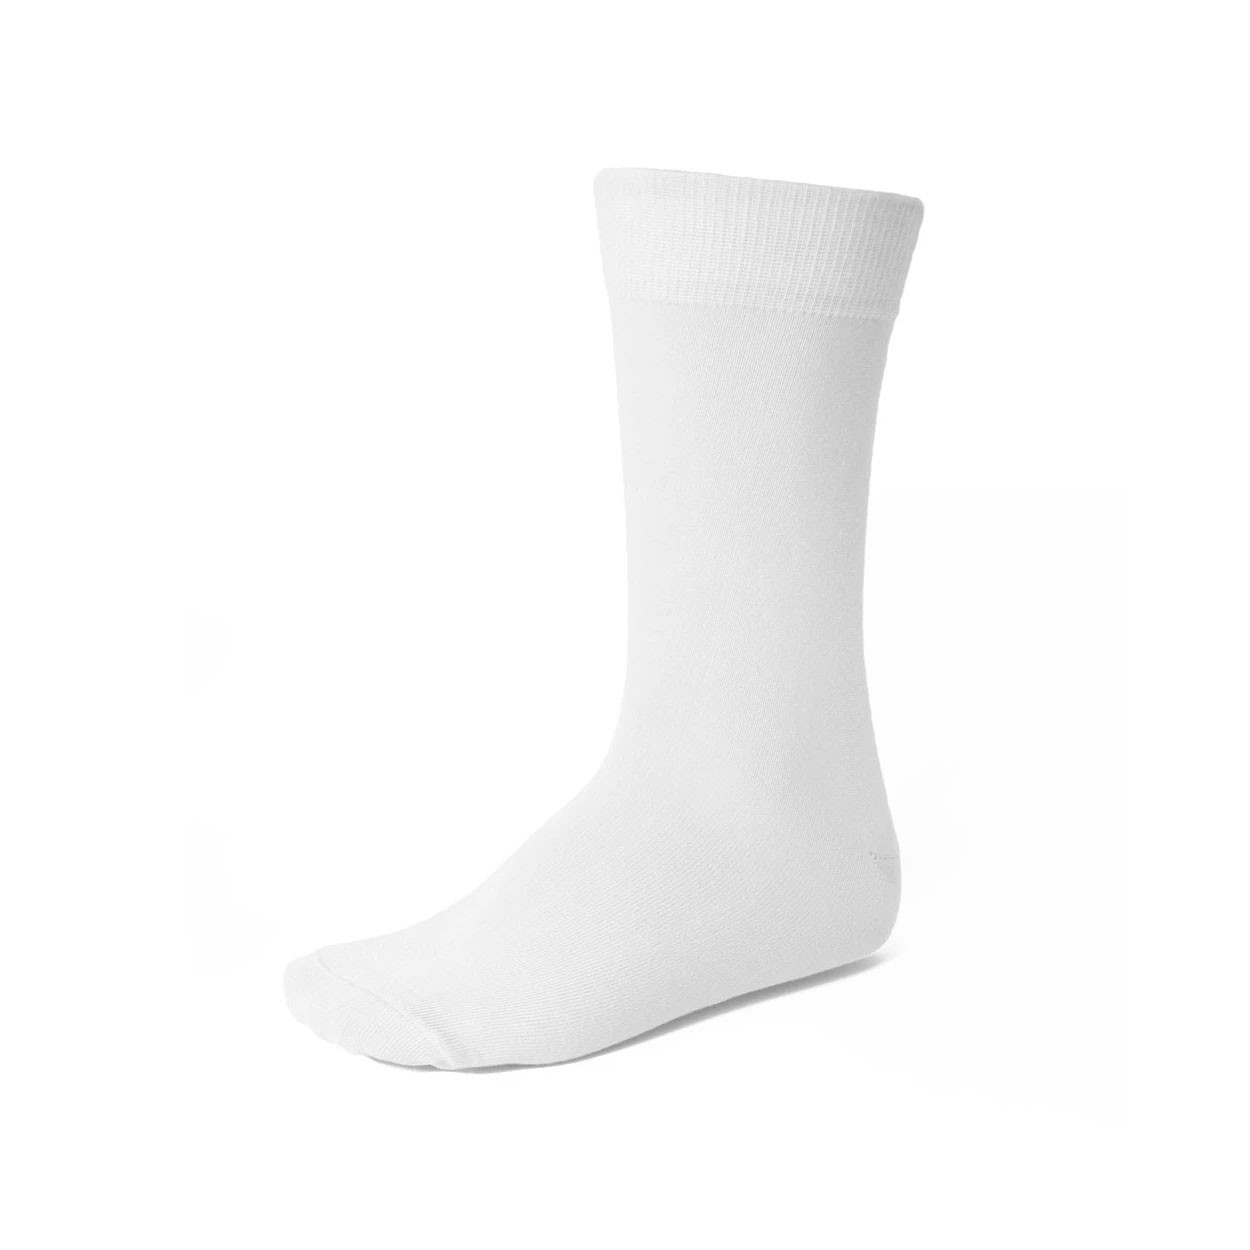 Product Details: Classic Socks White (AB HZTC Tube Sock Striped White)